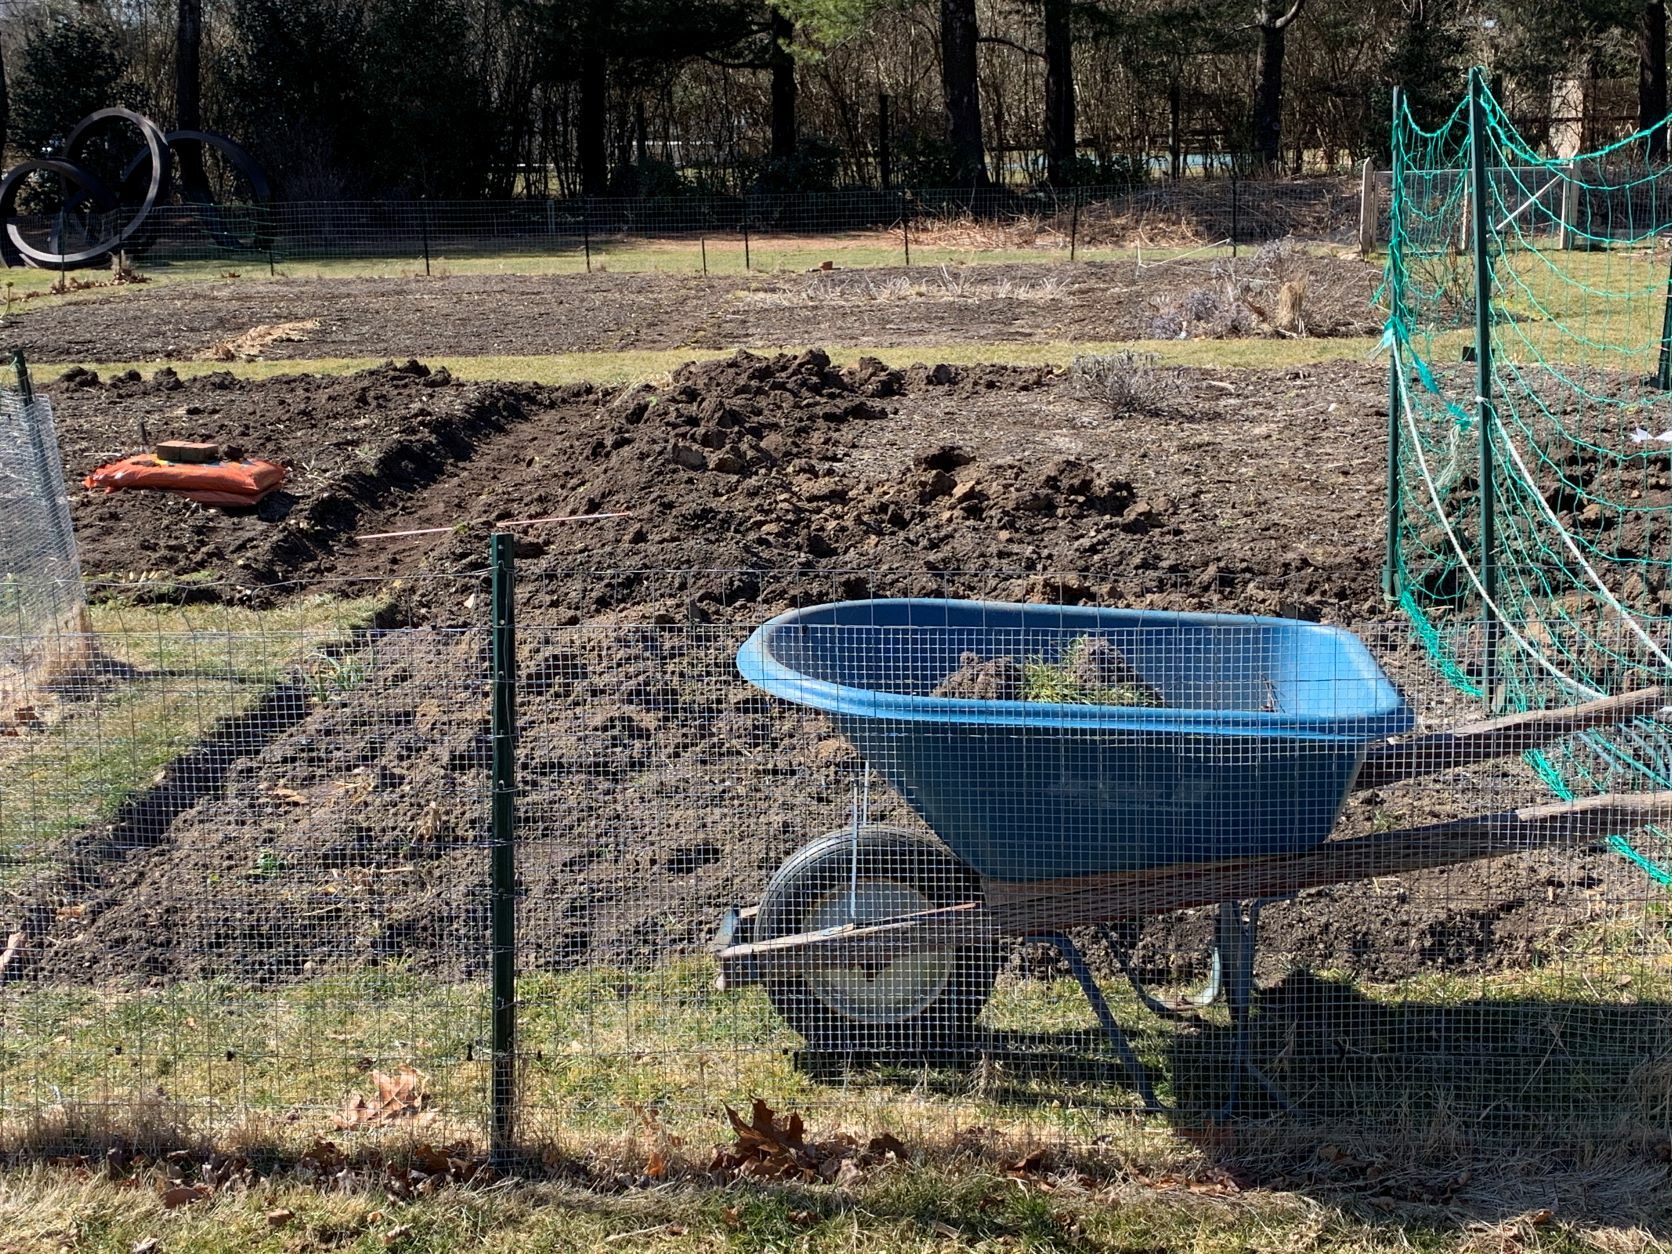 Community garden plots getting freshly mulched paths